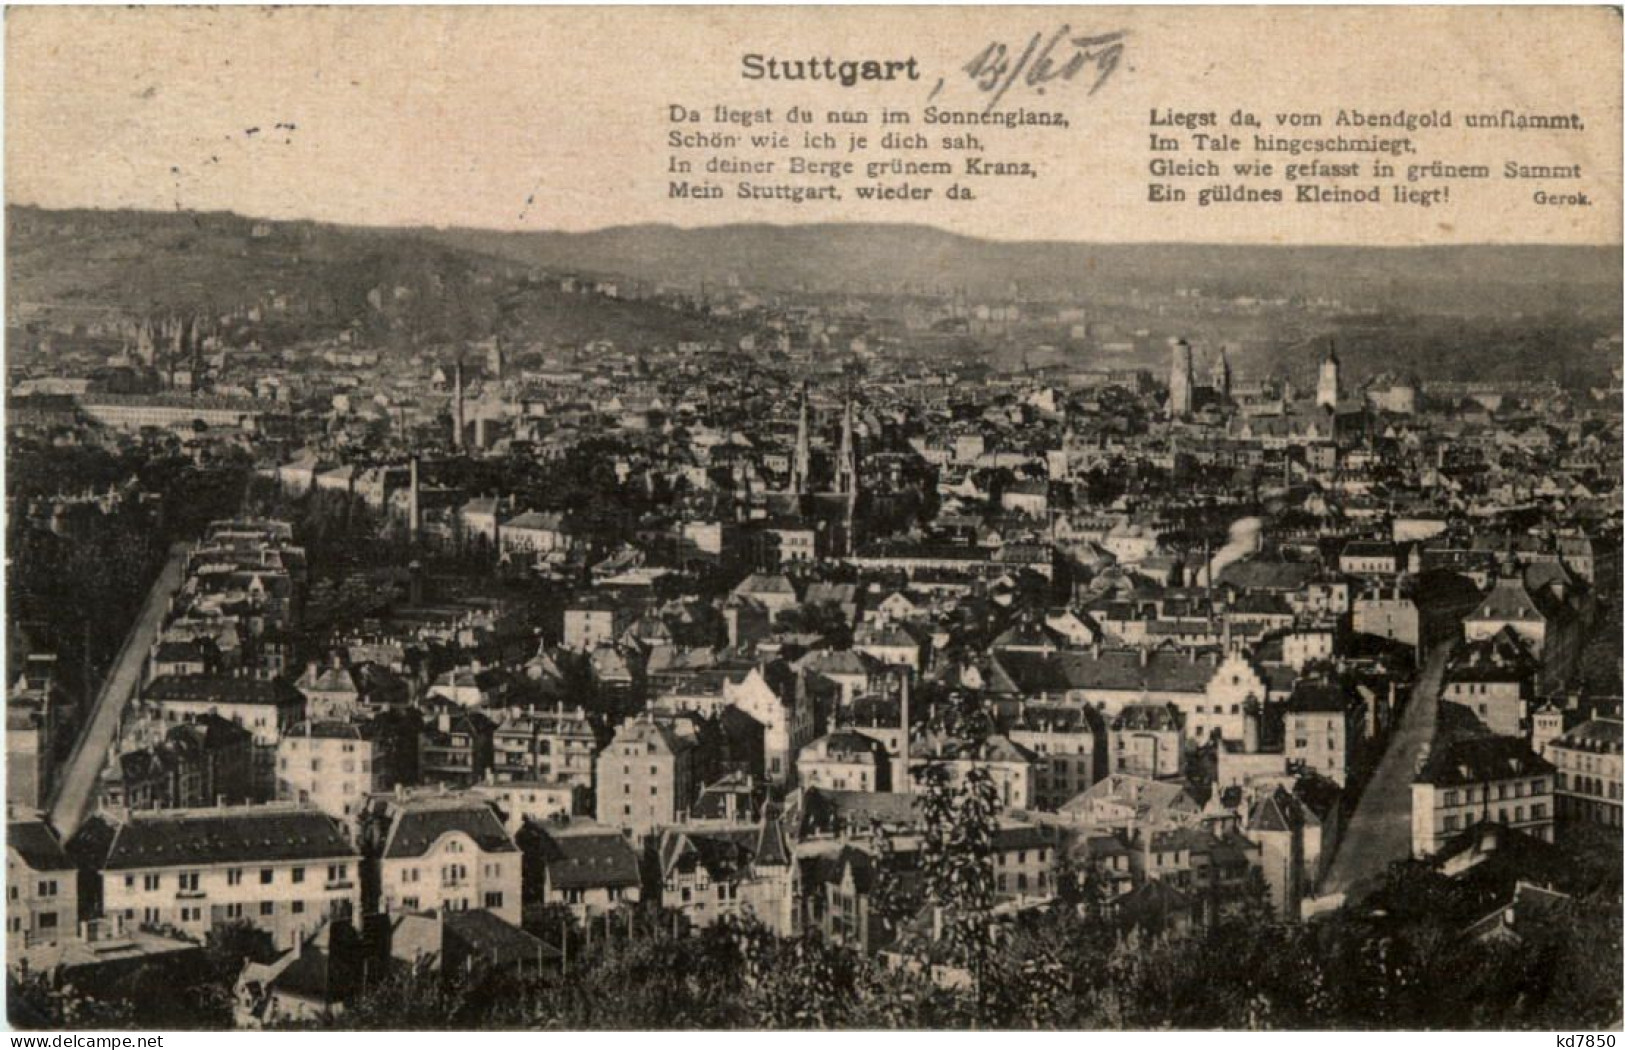 Stuttgart - 11. Handlungsgeholfentag 1909 - Stuttgart